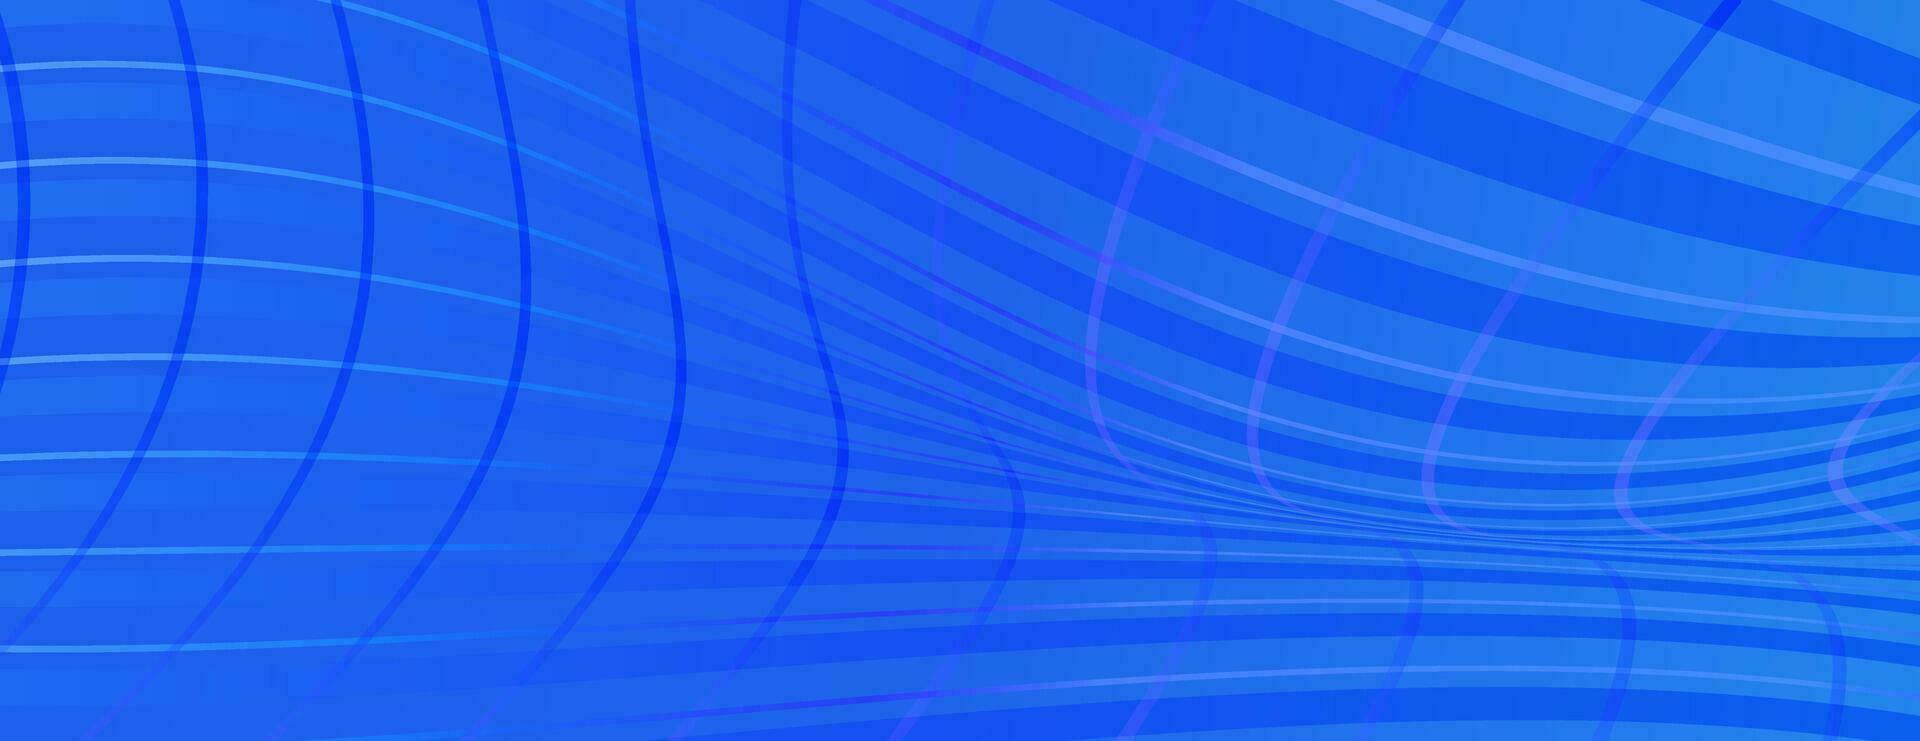 vector resumen azul antecedentes con suave tartán ondulado. brillante color transición degradado fondo de pantalla atrás. moderno brillante degradado ola líneas fon. traje para póster, cubrir, bandera, folleto, sitio web, rebaja